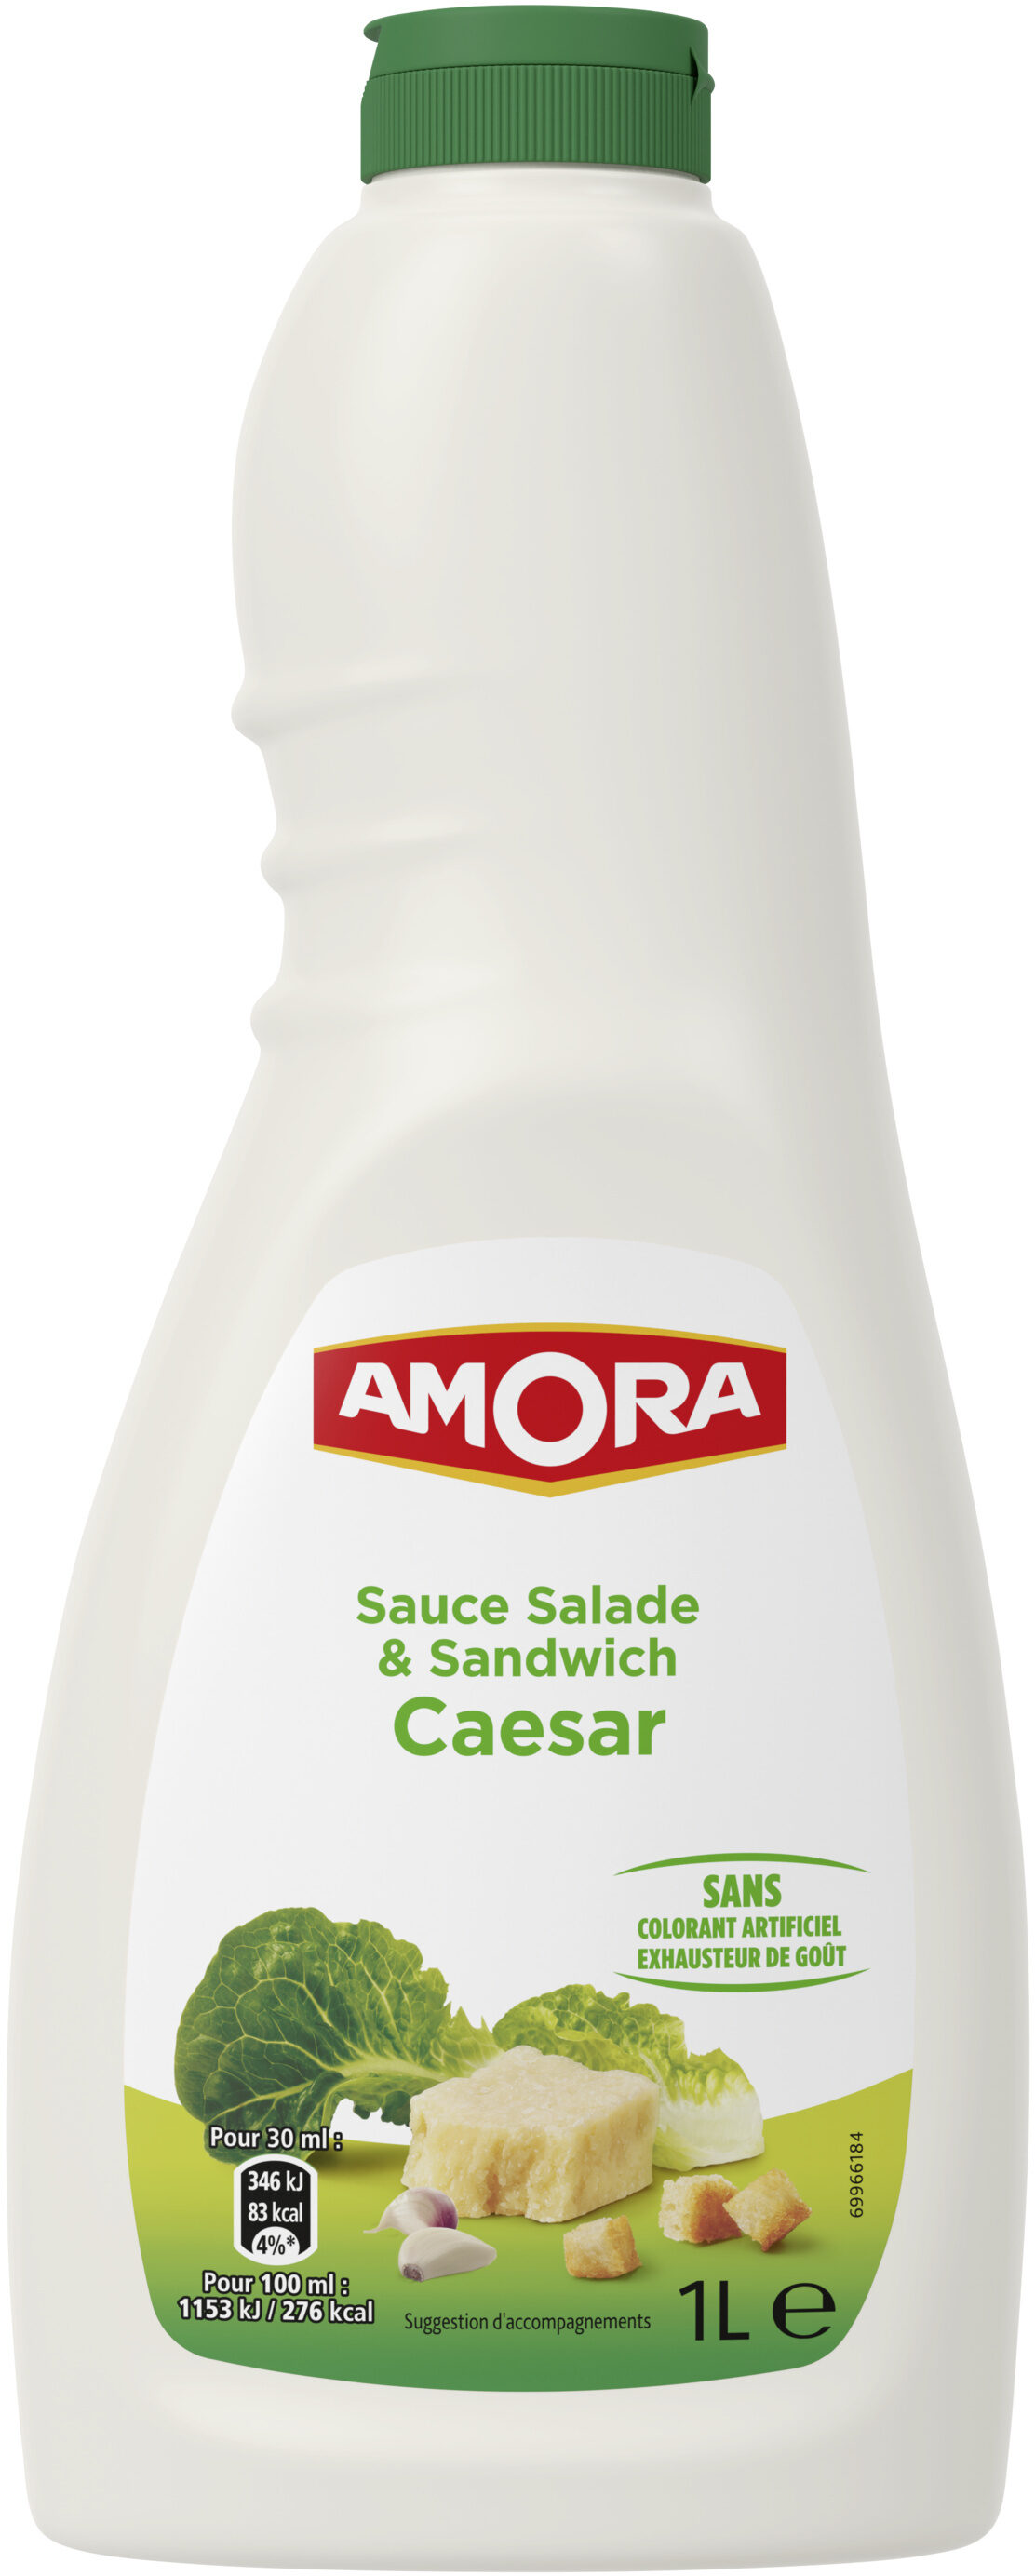 Amora Sauce Salade & Sandwich Ceasar 1L - Produit